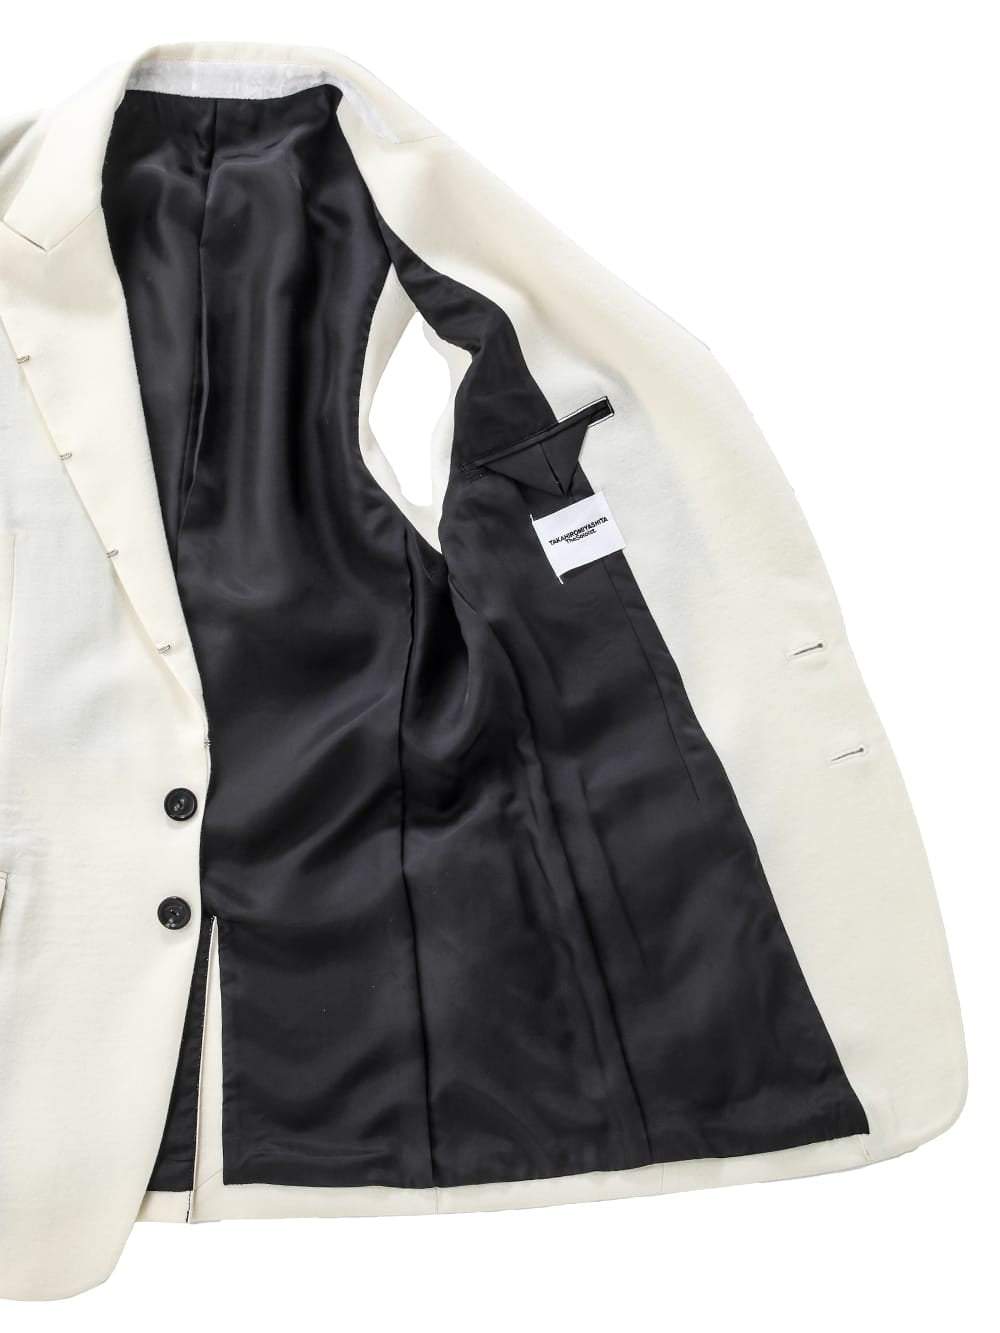 right - left sleeveless peaked lapel jacket.